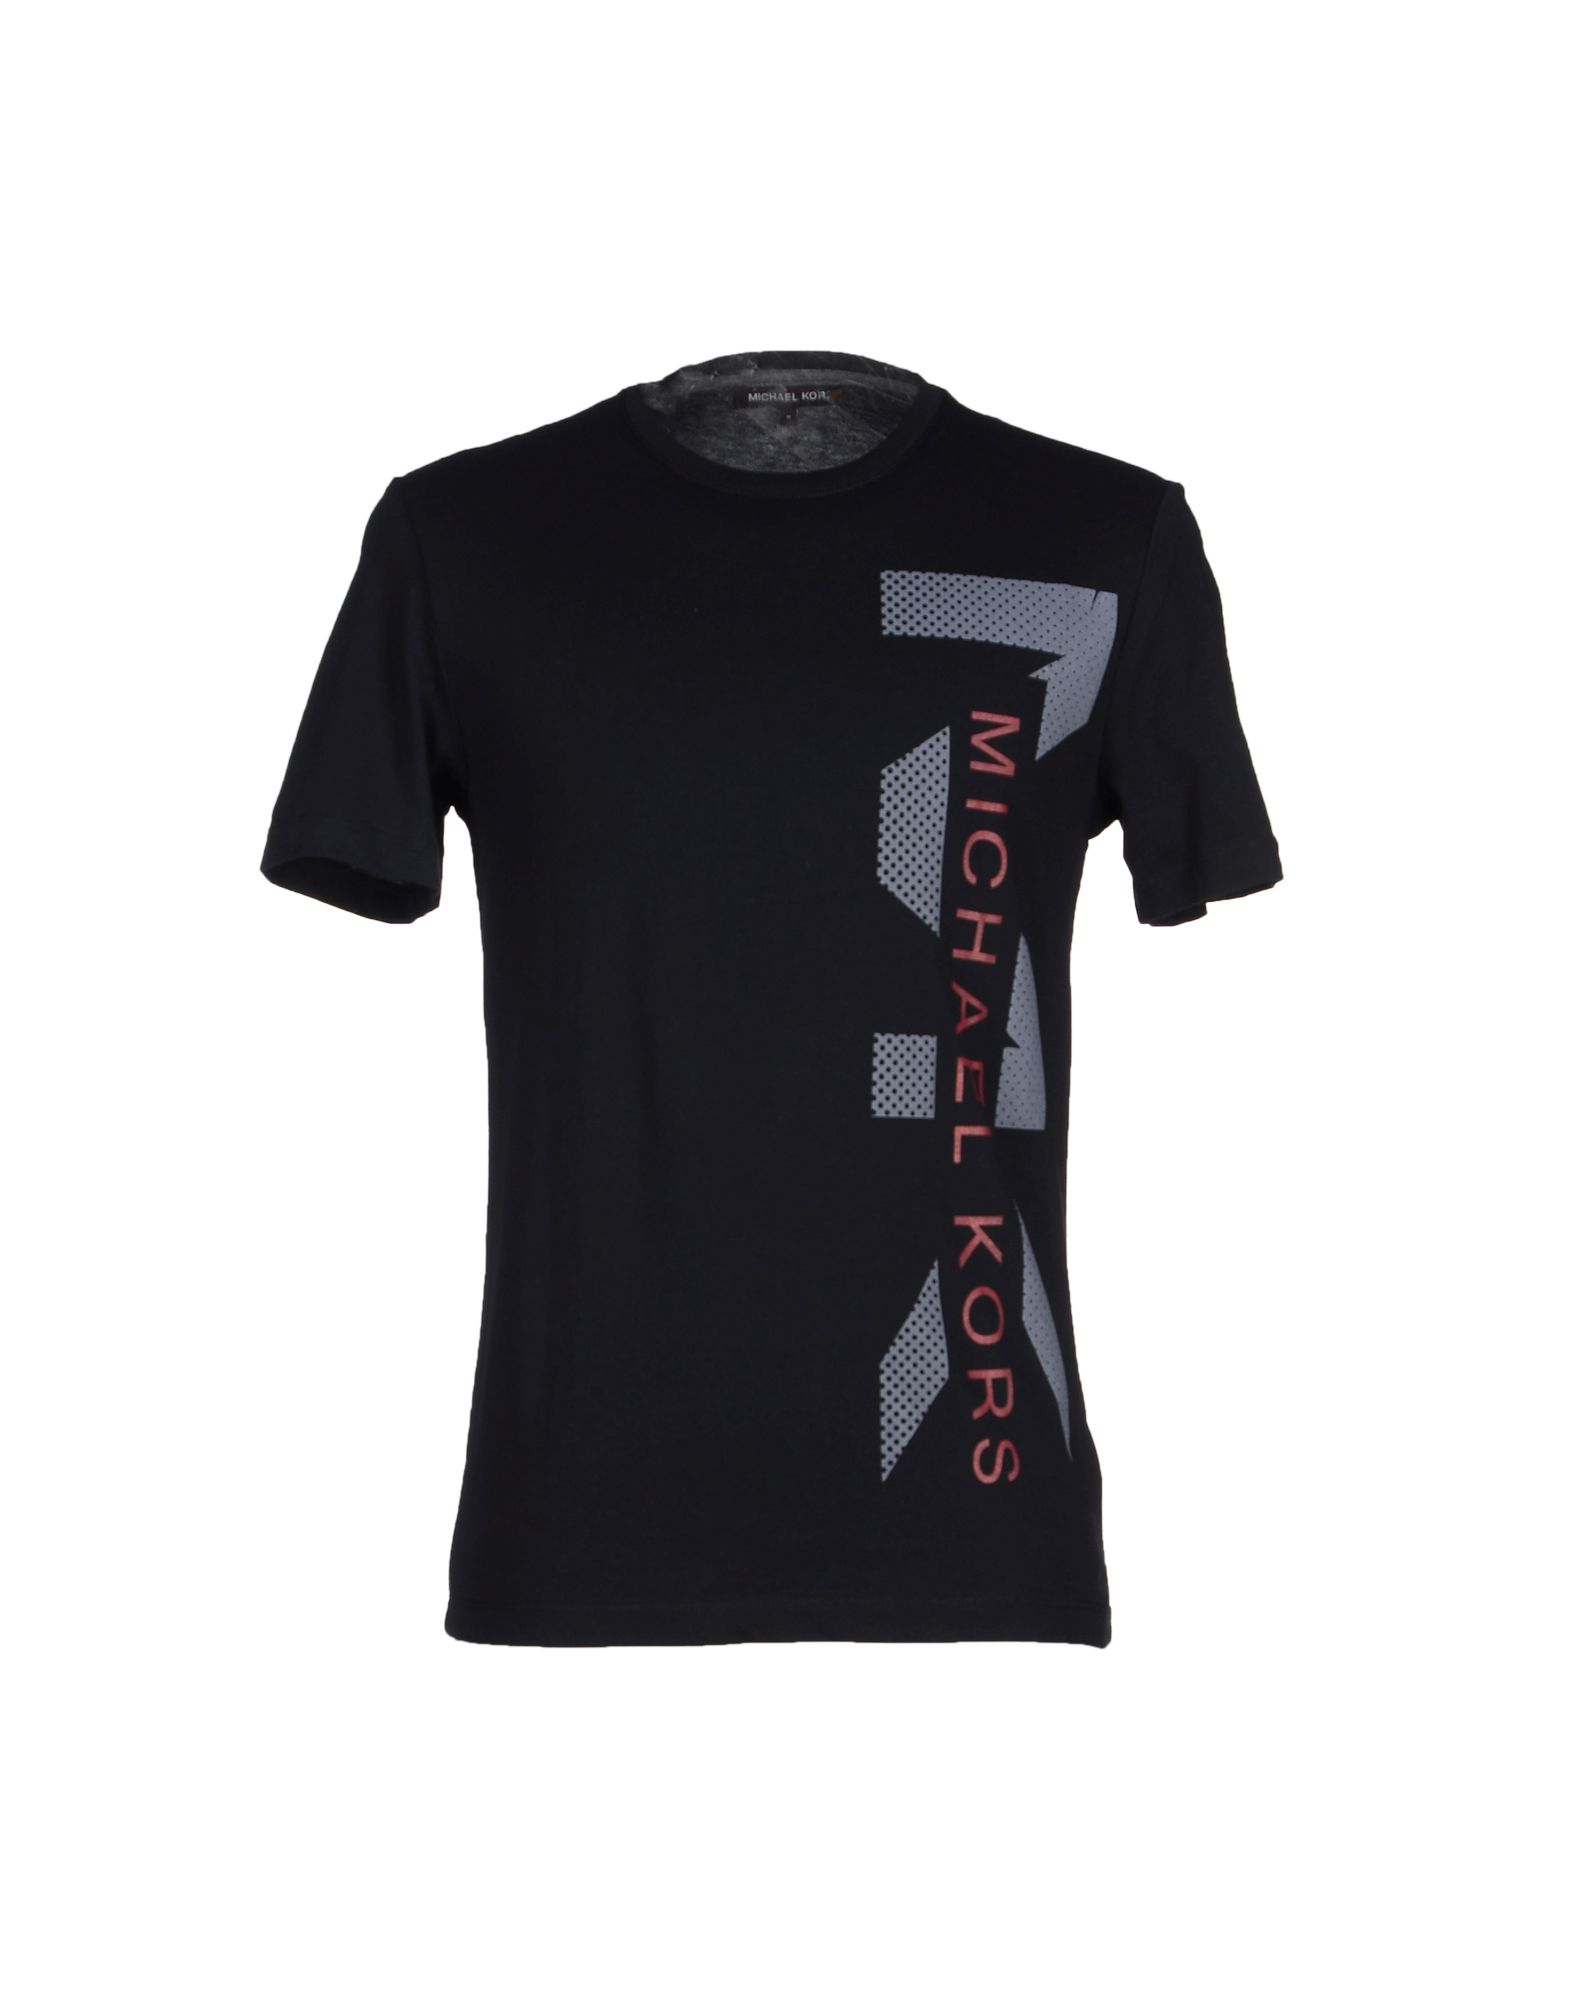 Michael Kors Cotton T-shirt in Black for Men - Lyst